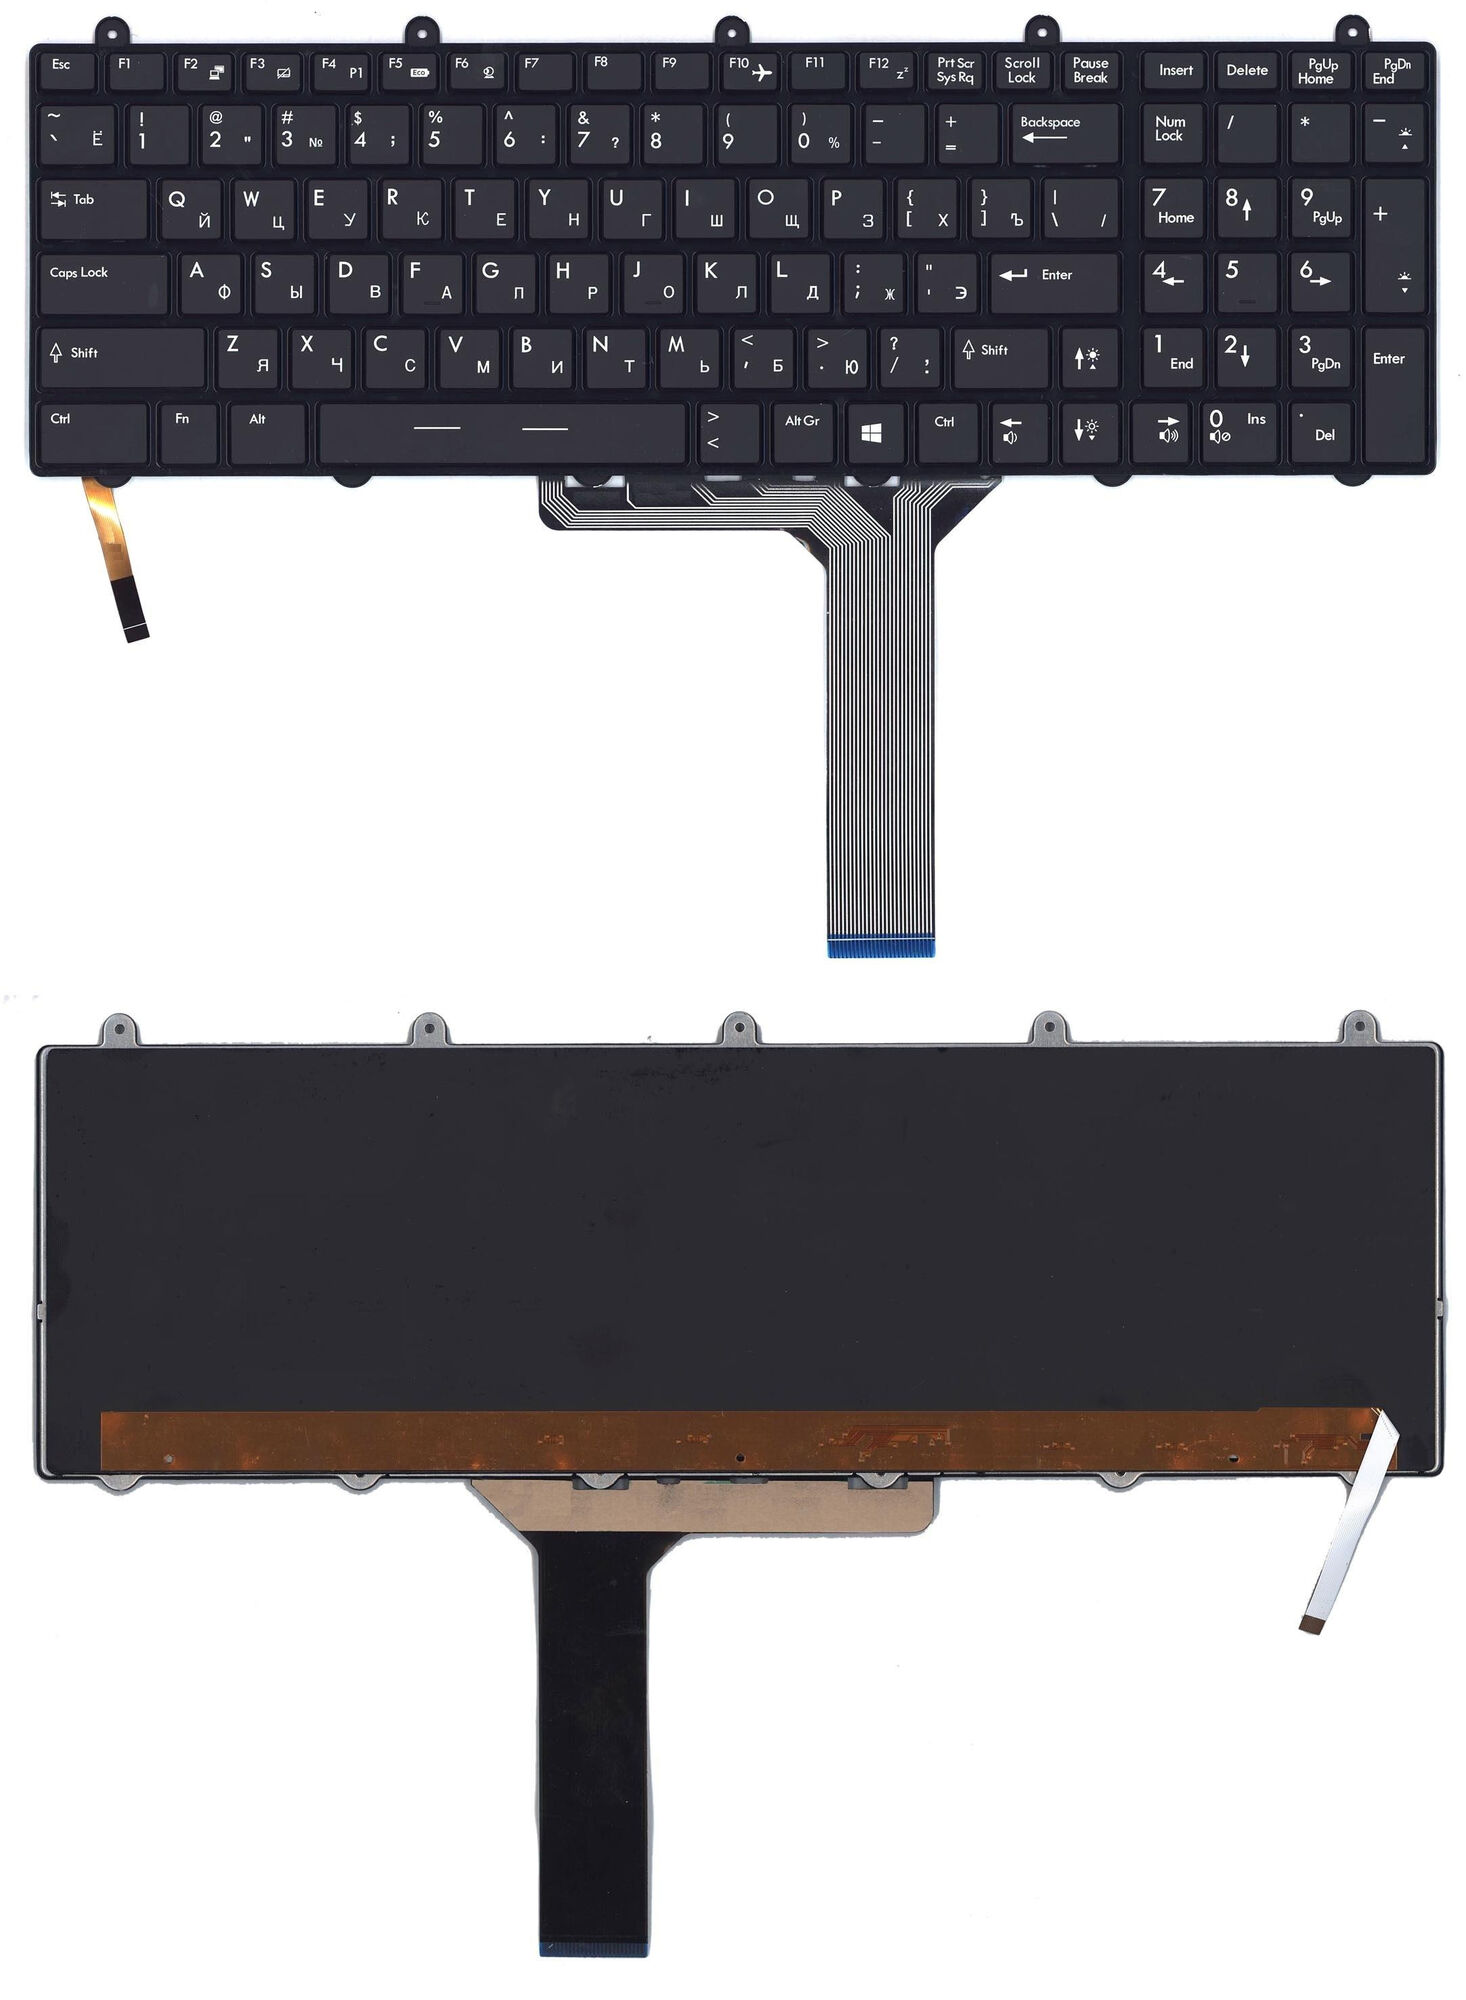 Клавиатура для MSI GE60 GE70 с подсветкой 7 цветов p/n: V123322CK1, V123322IK1, V139922BK1